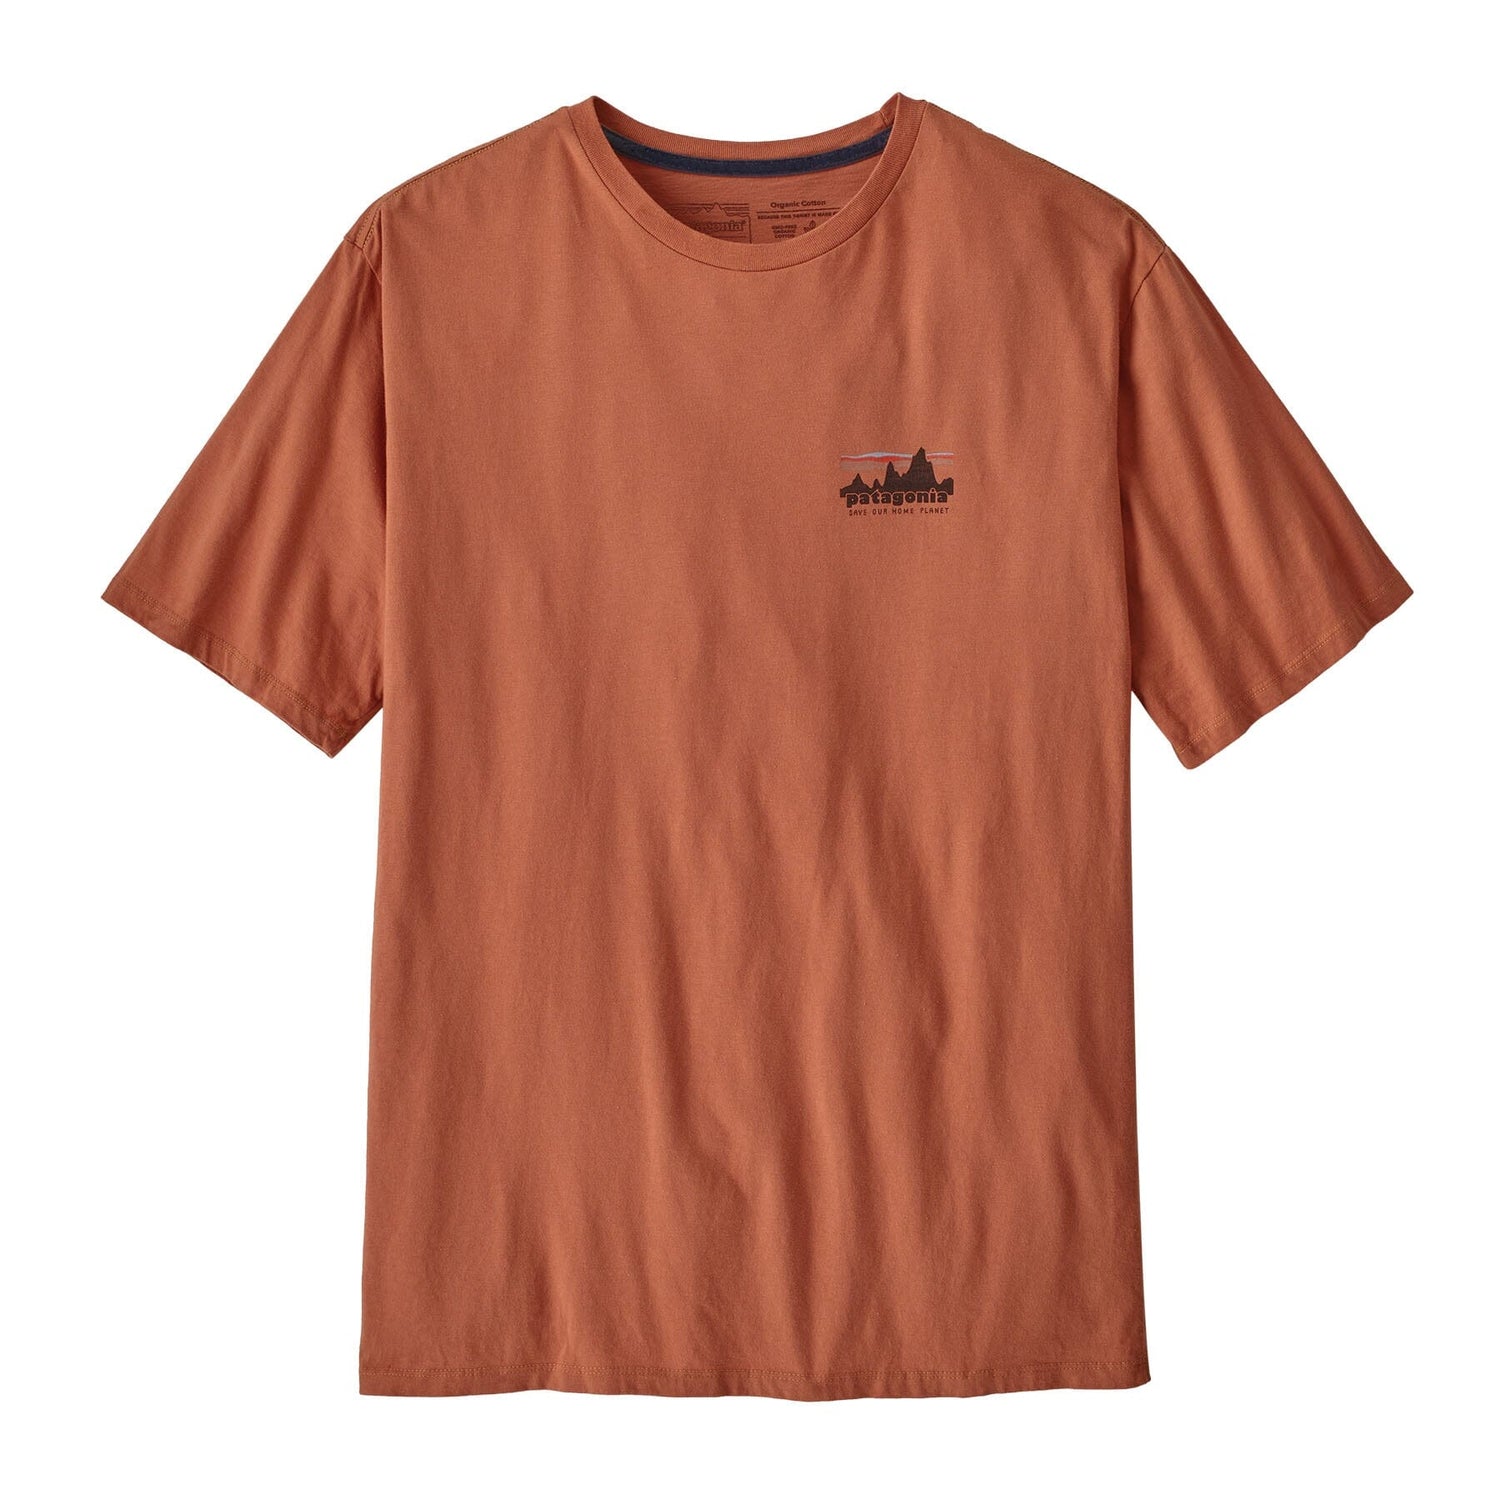 M's '73 Skyline Organic T-Shirt - 100% Organic Cotton Shirt Patagonia Sienna Clay S 